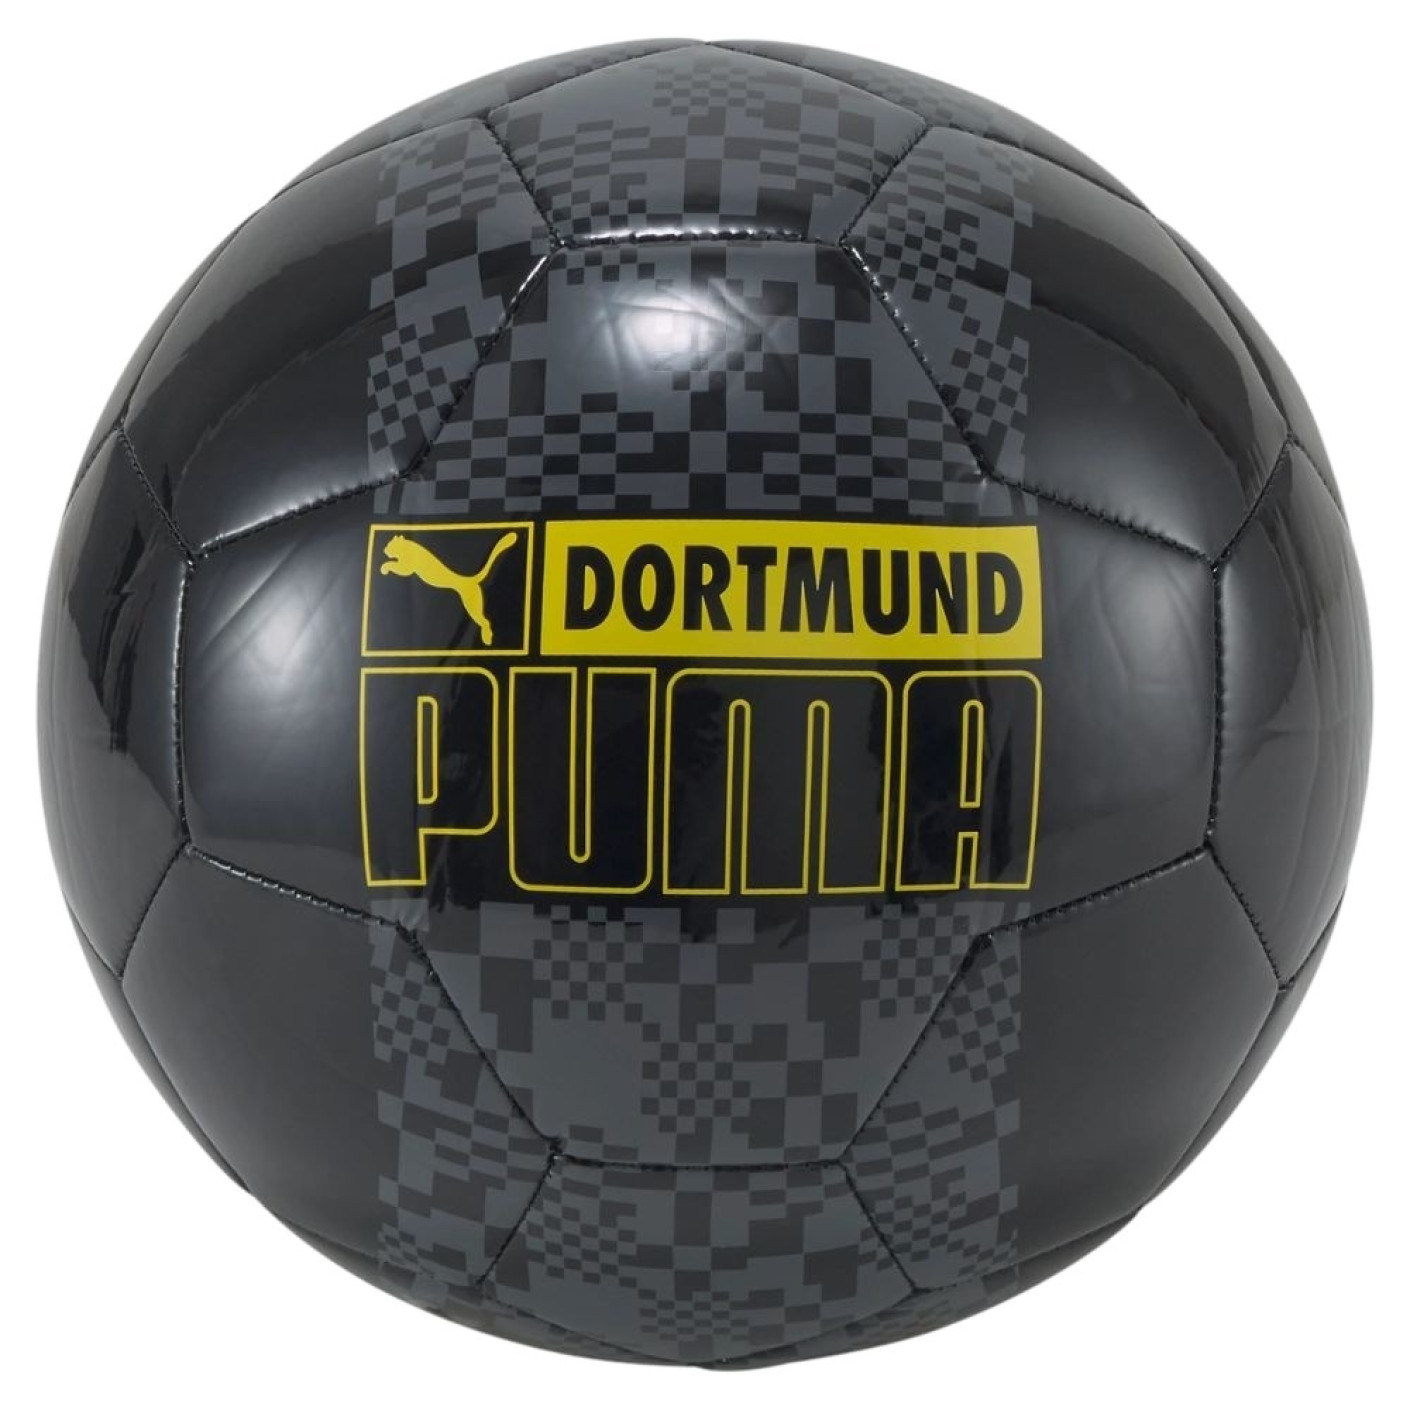 PUMA Borussia Dortmund ftblCore Ballon Football Noir Jaune